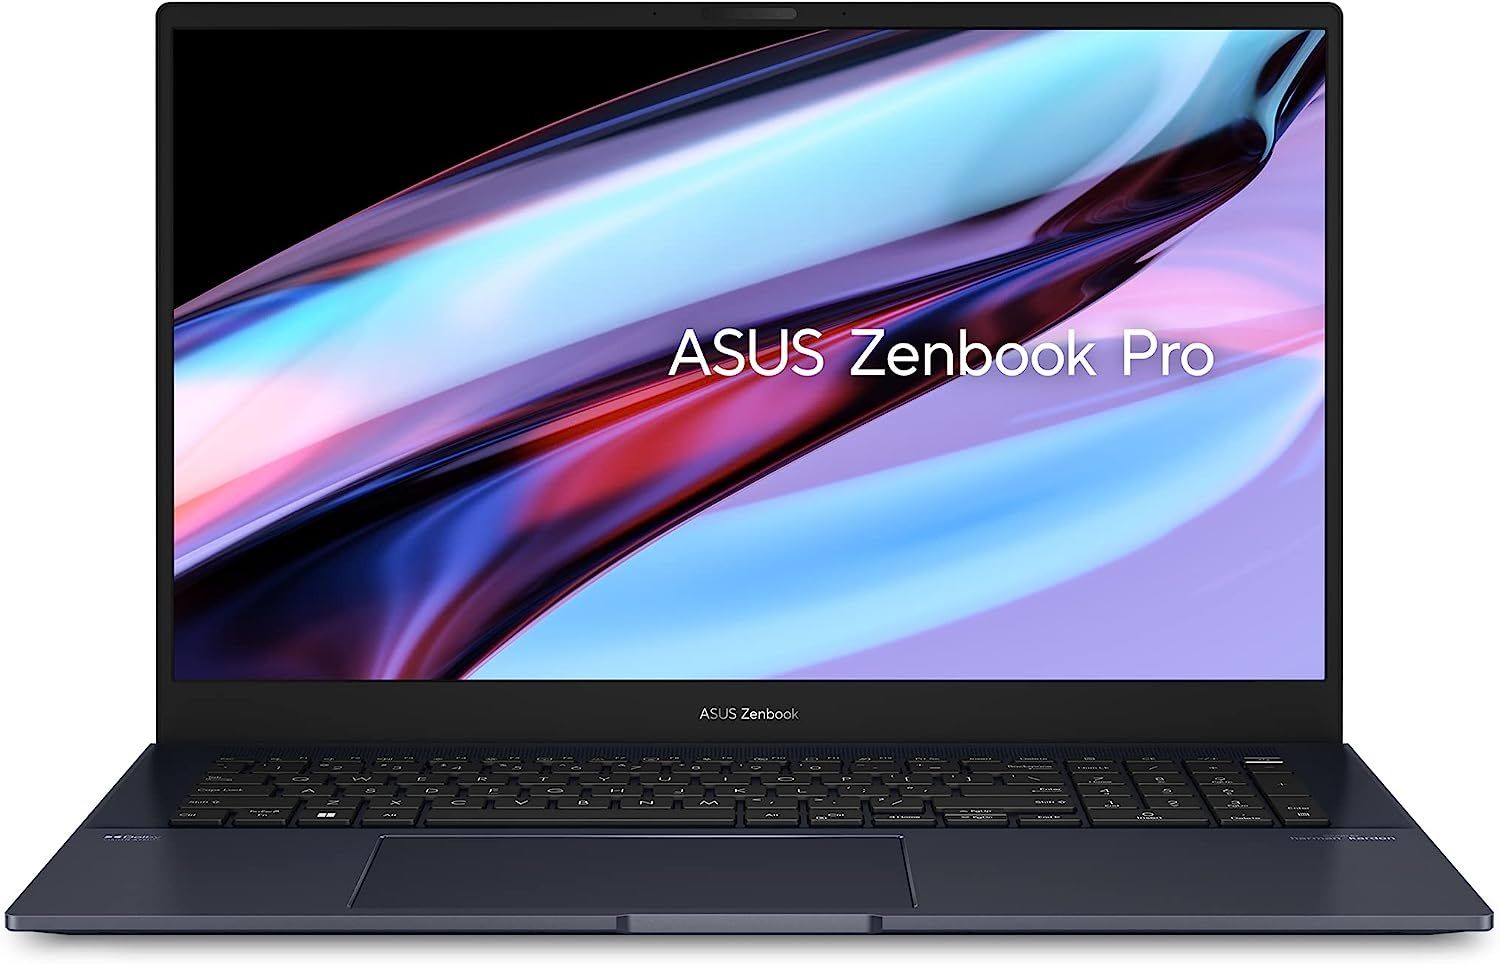 ASUS Zenbook Pro 17 Front